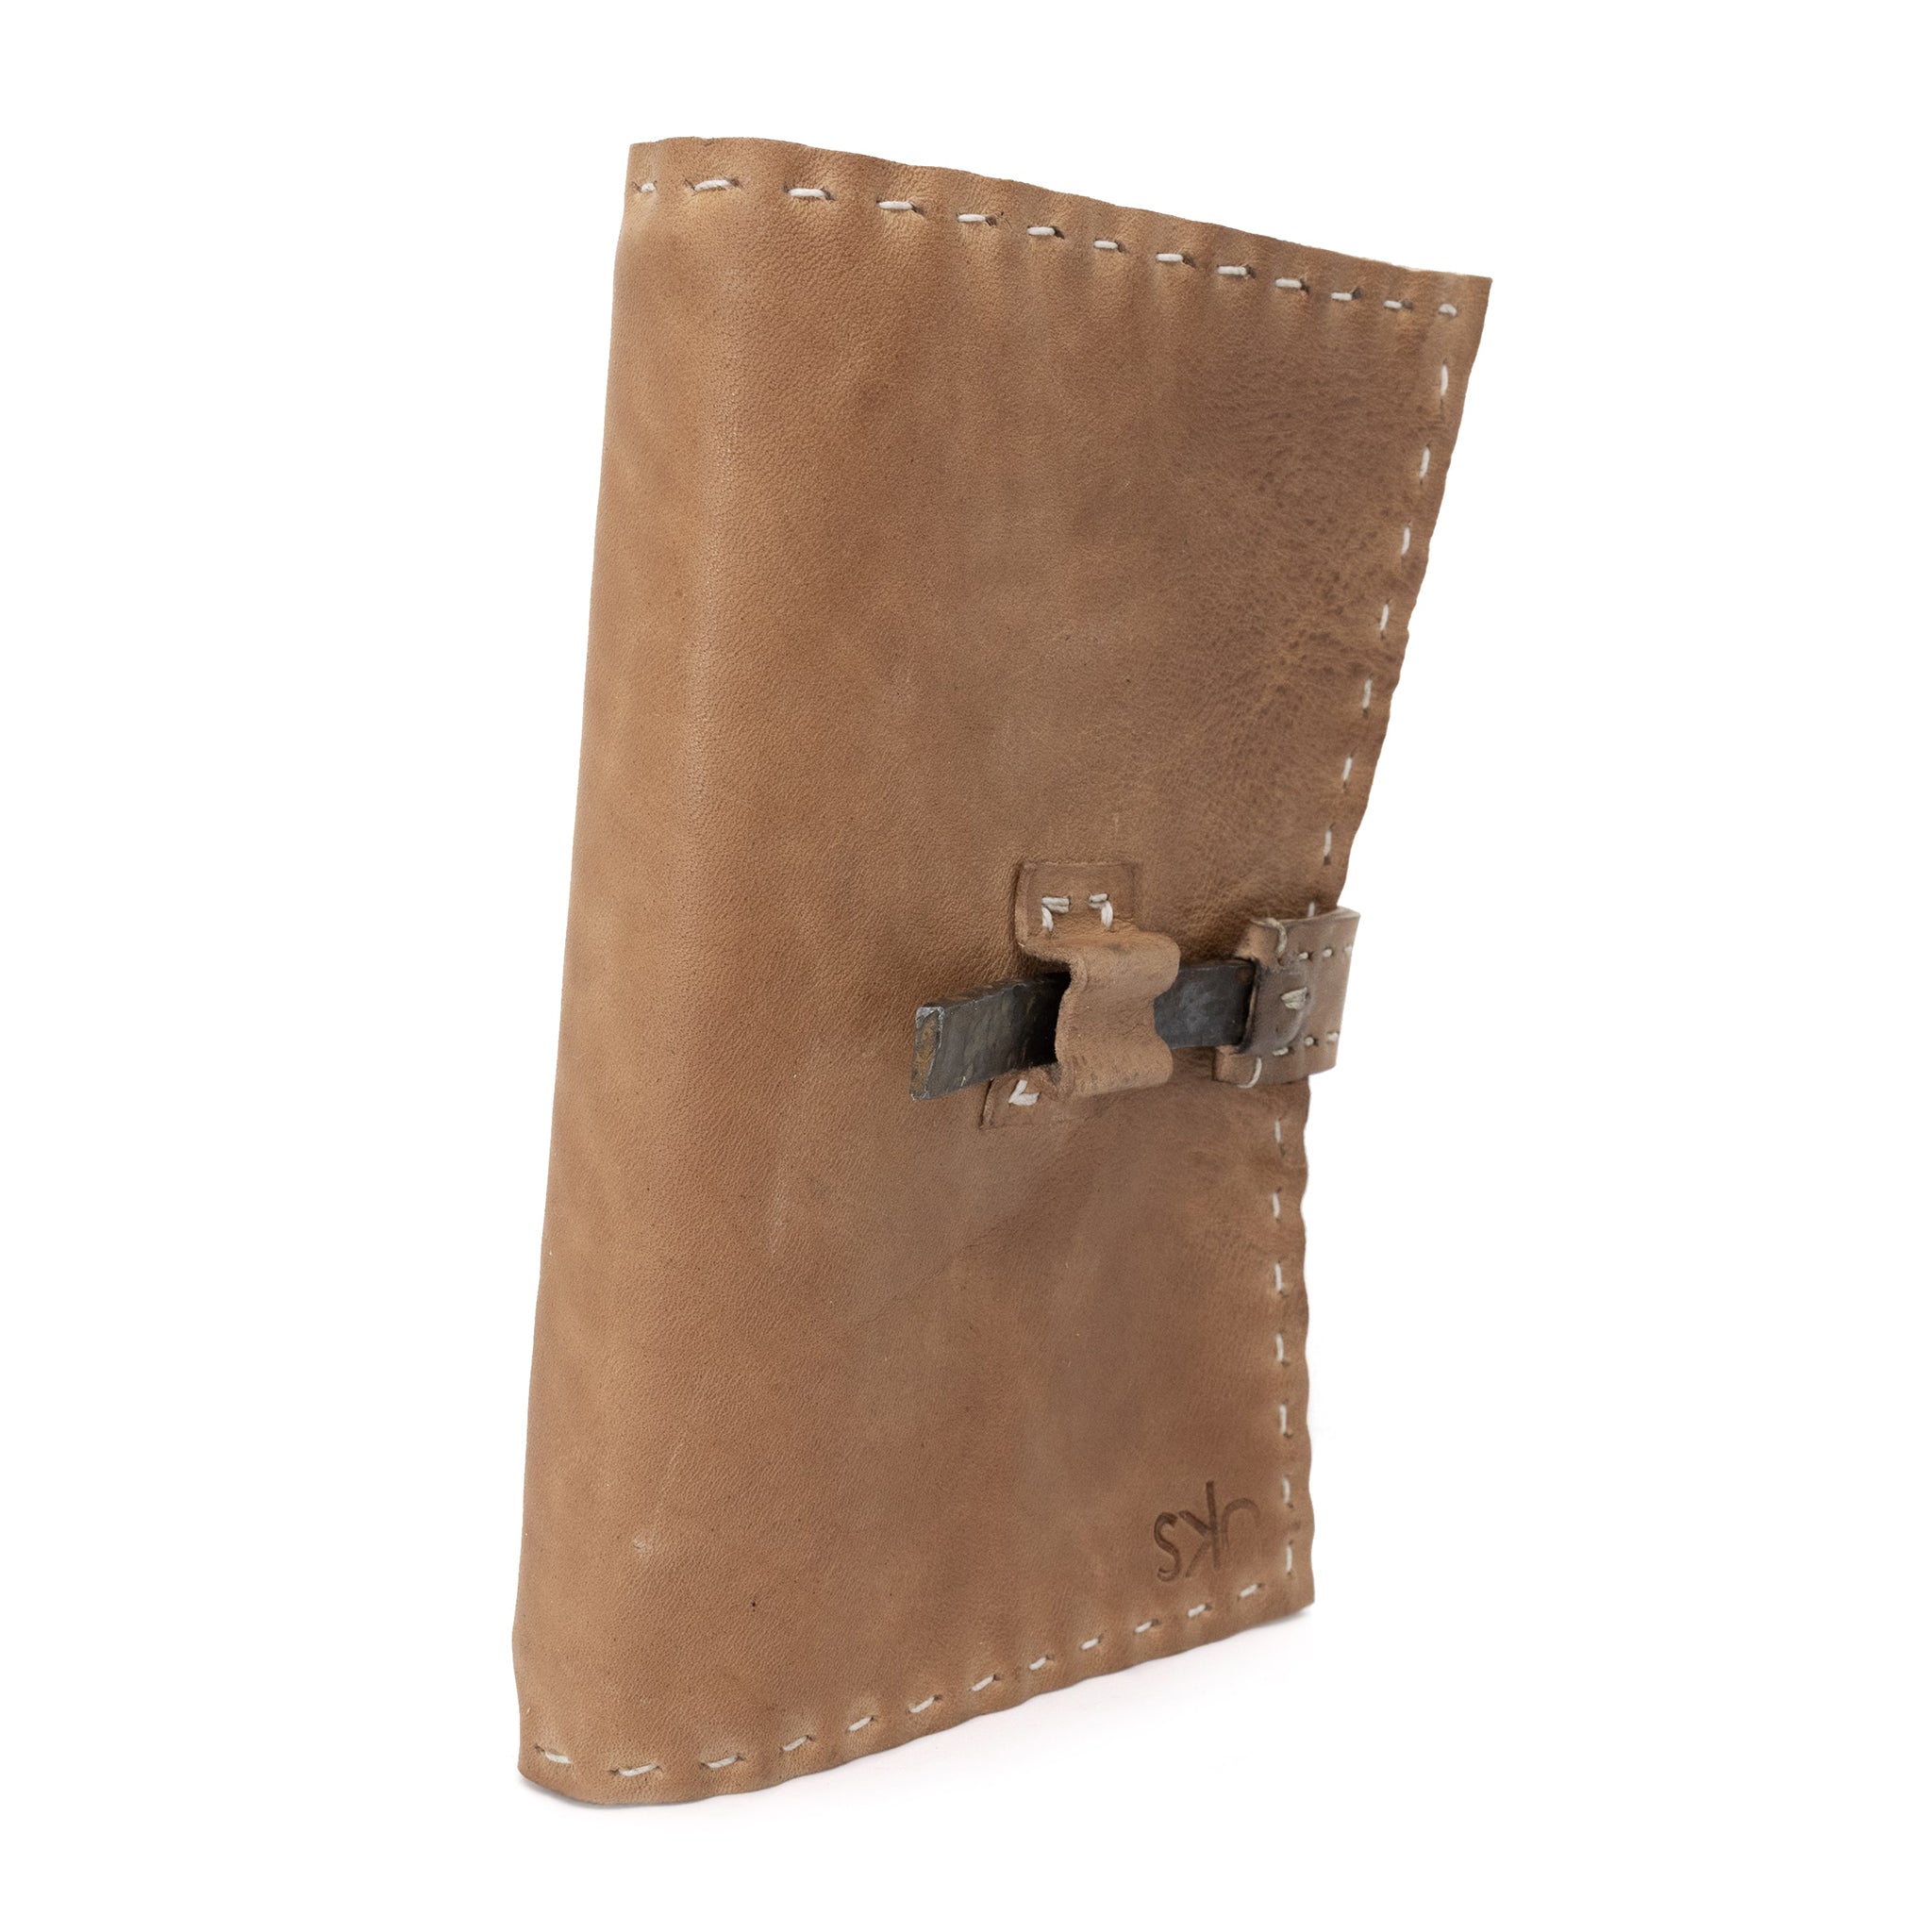 culatta leather journals from atelier skn online at atelier skn